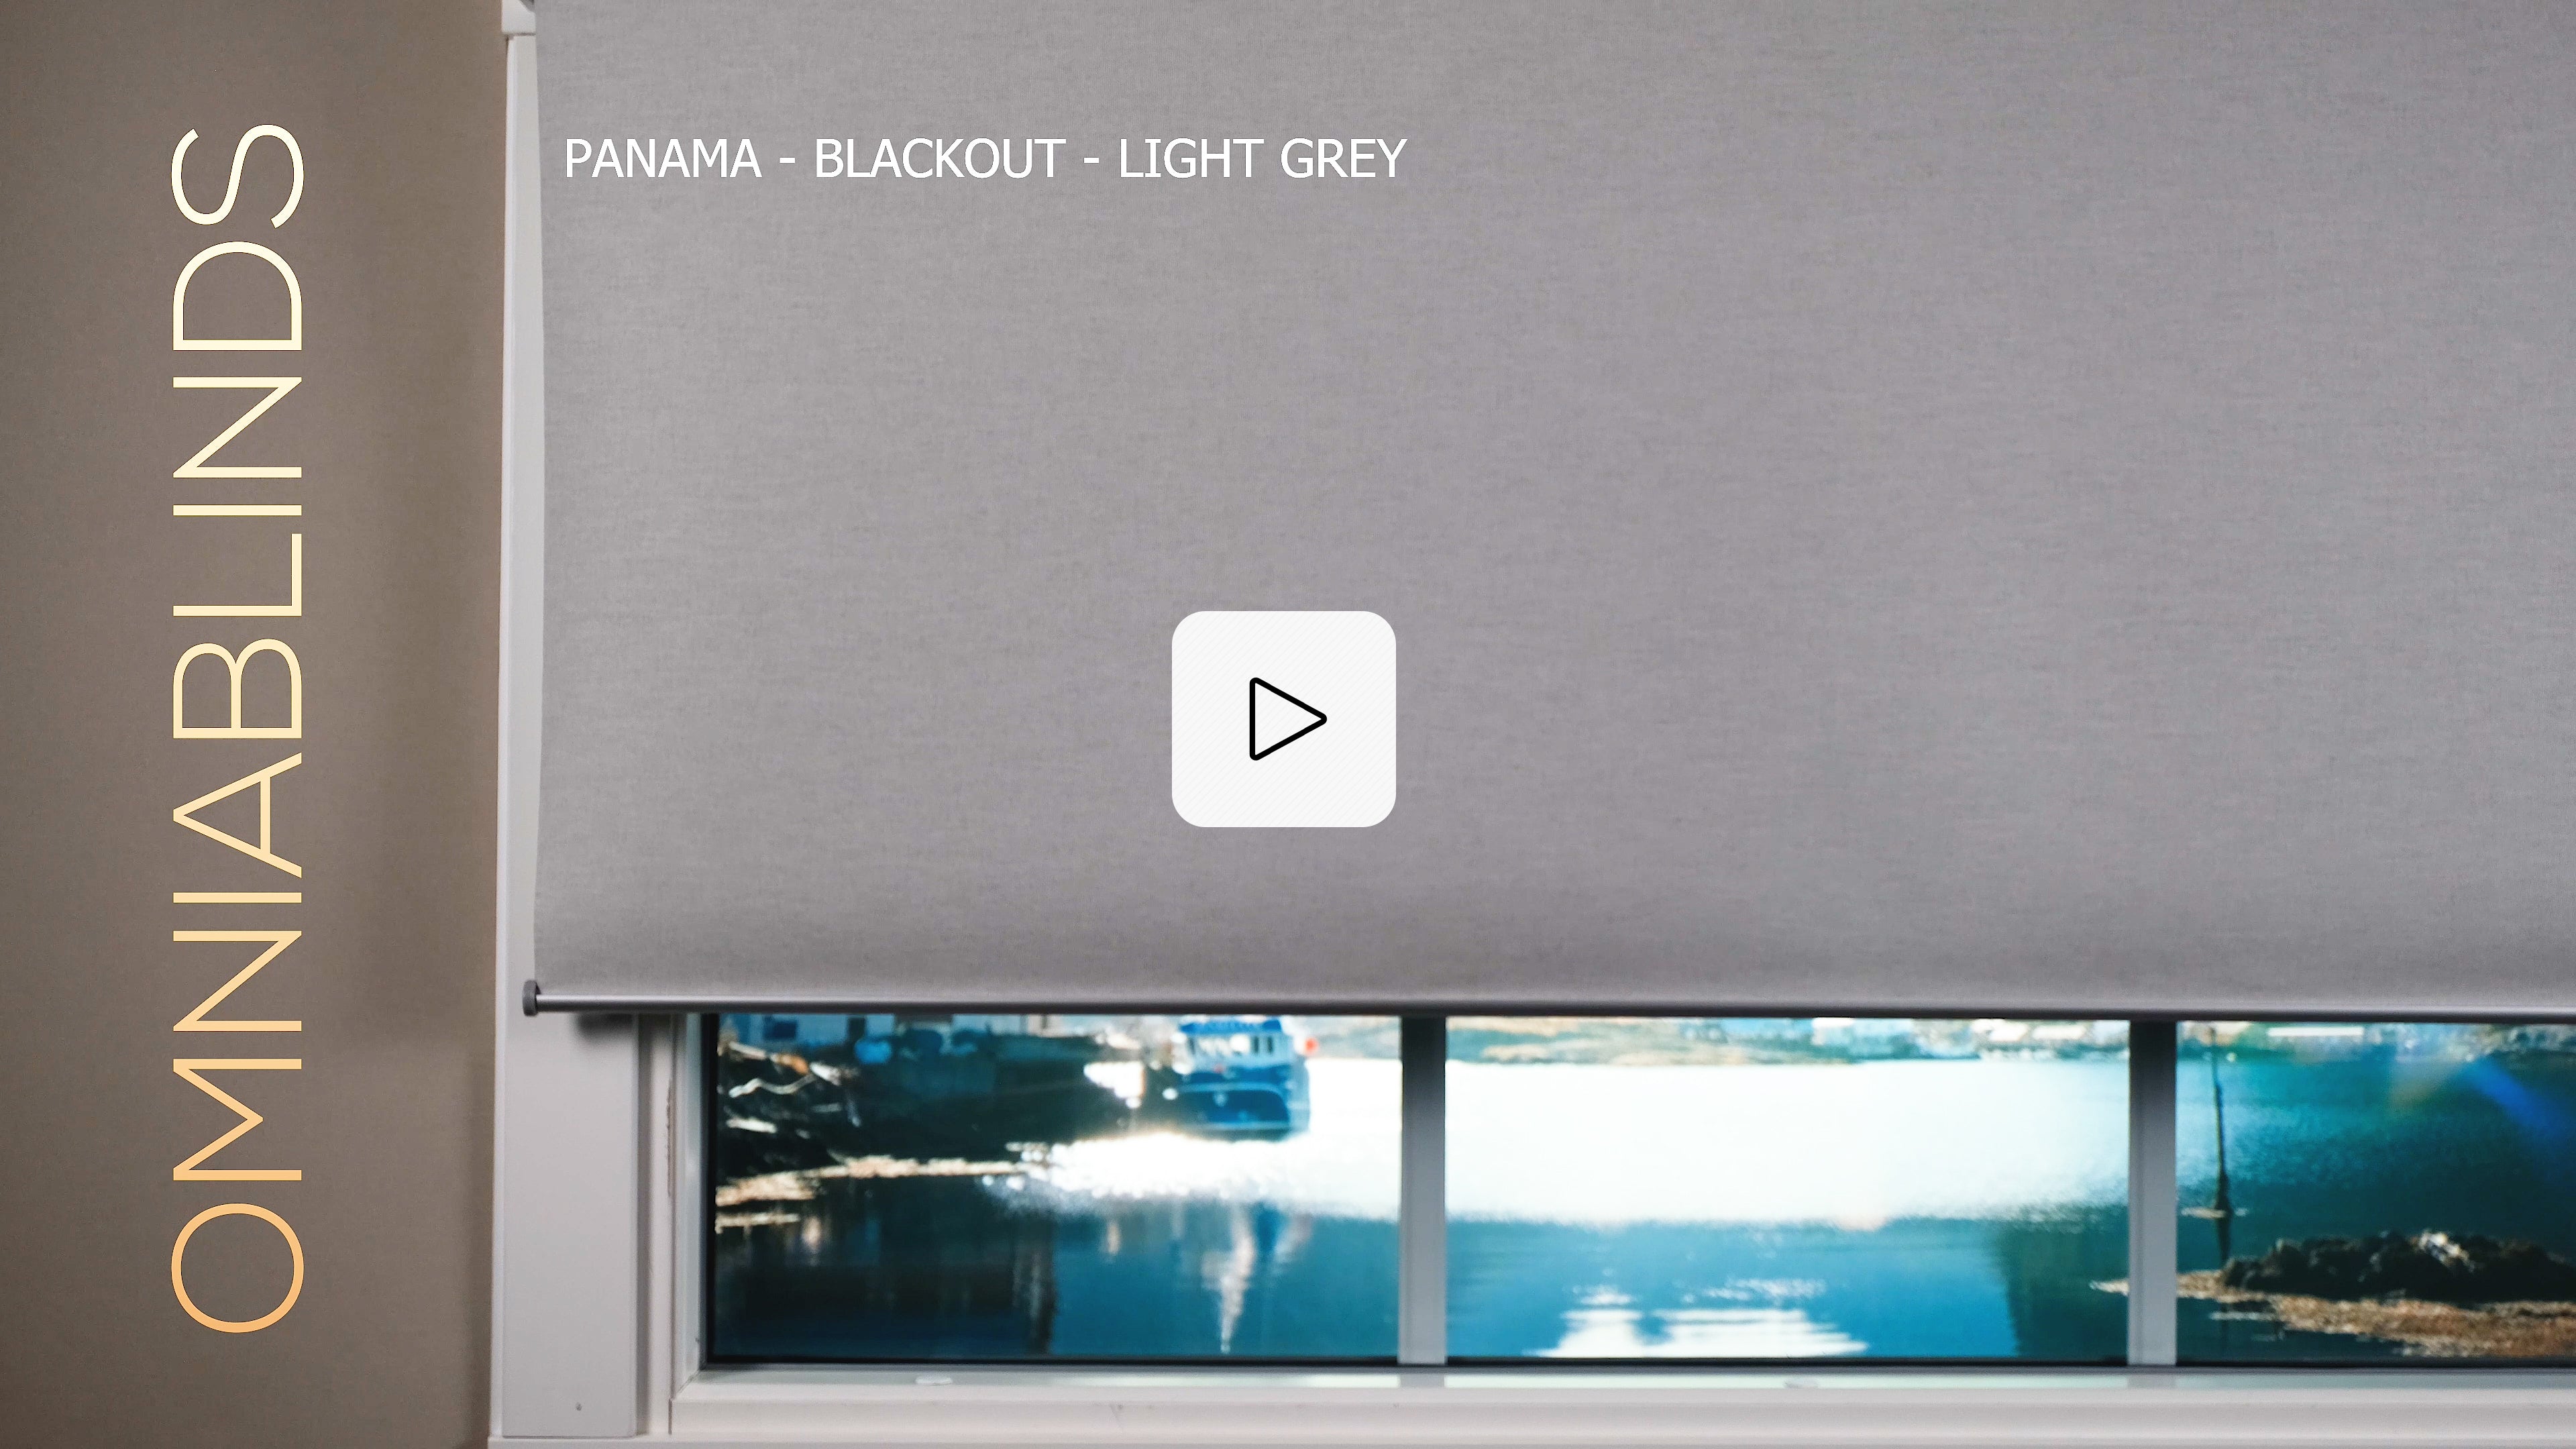 Panama - Blackout - Light Grey